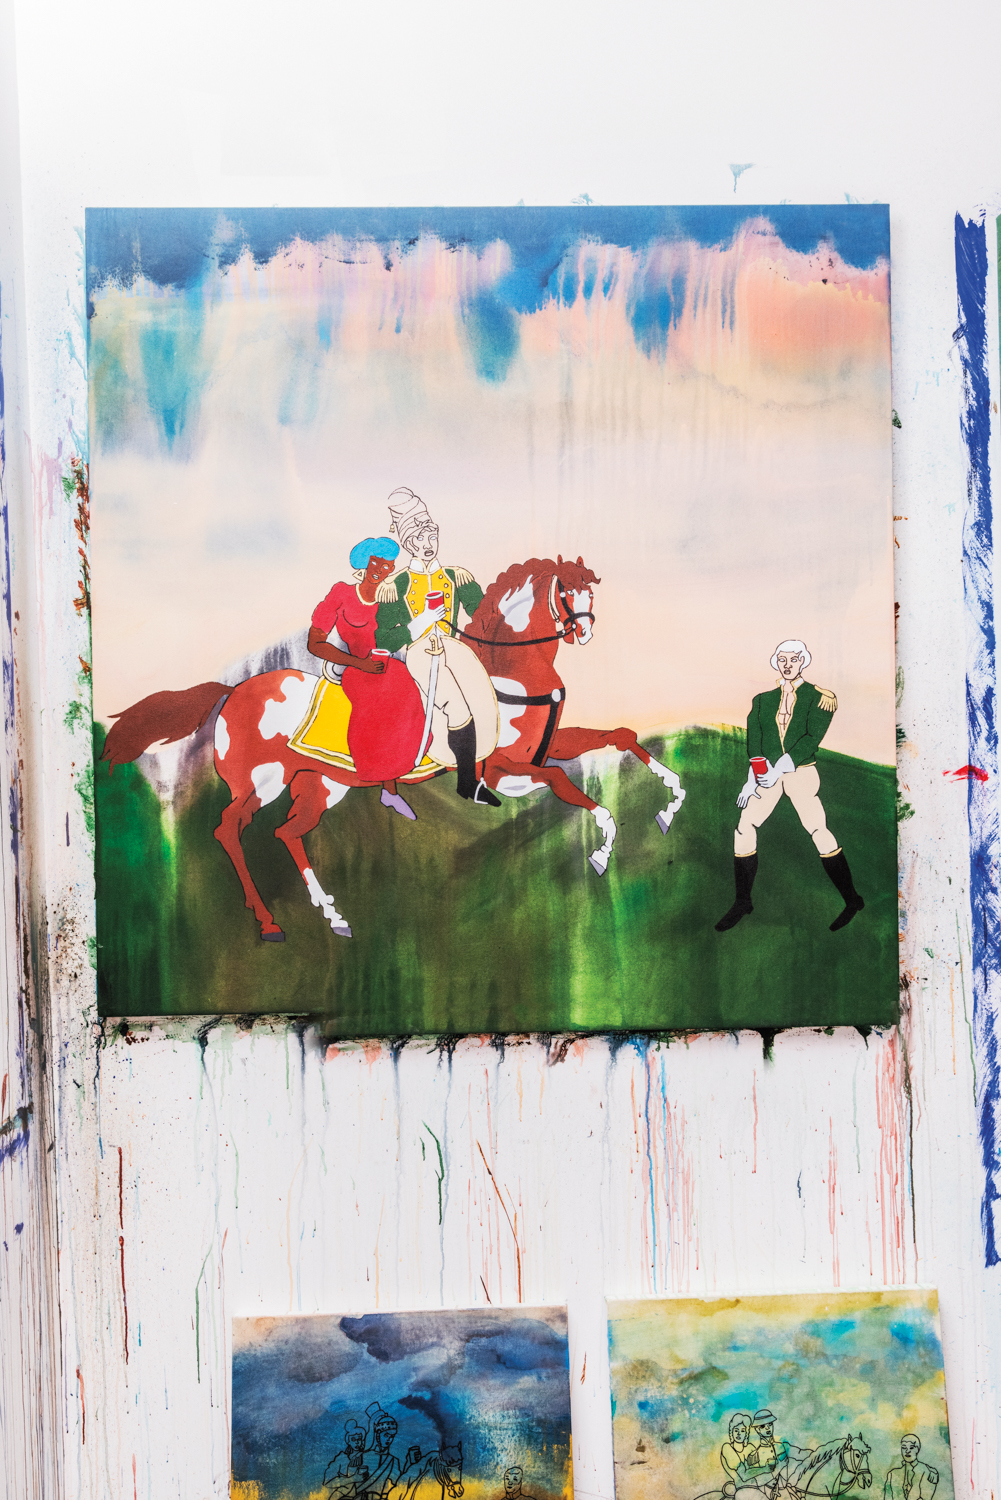 a painting by umar rashid depicting two men on horseback